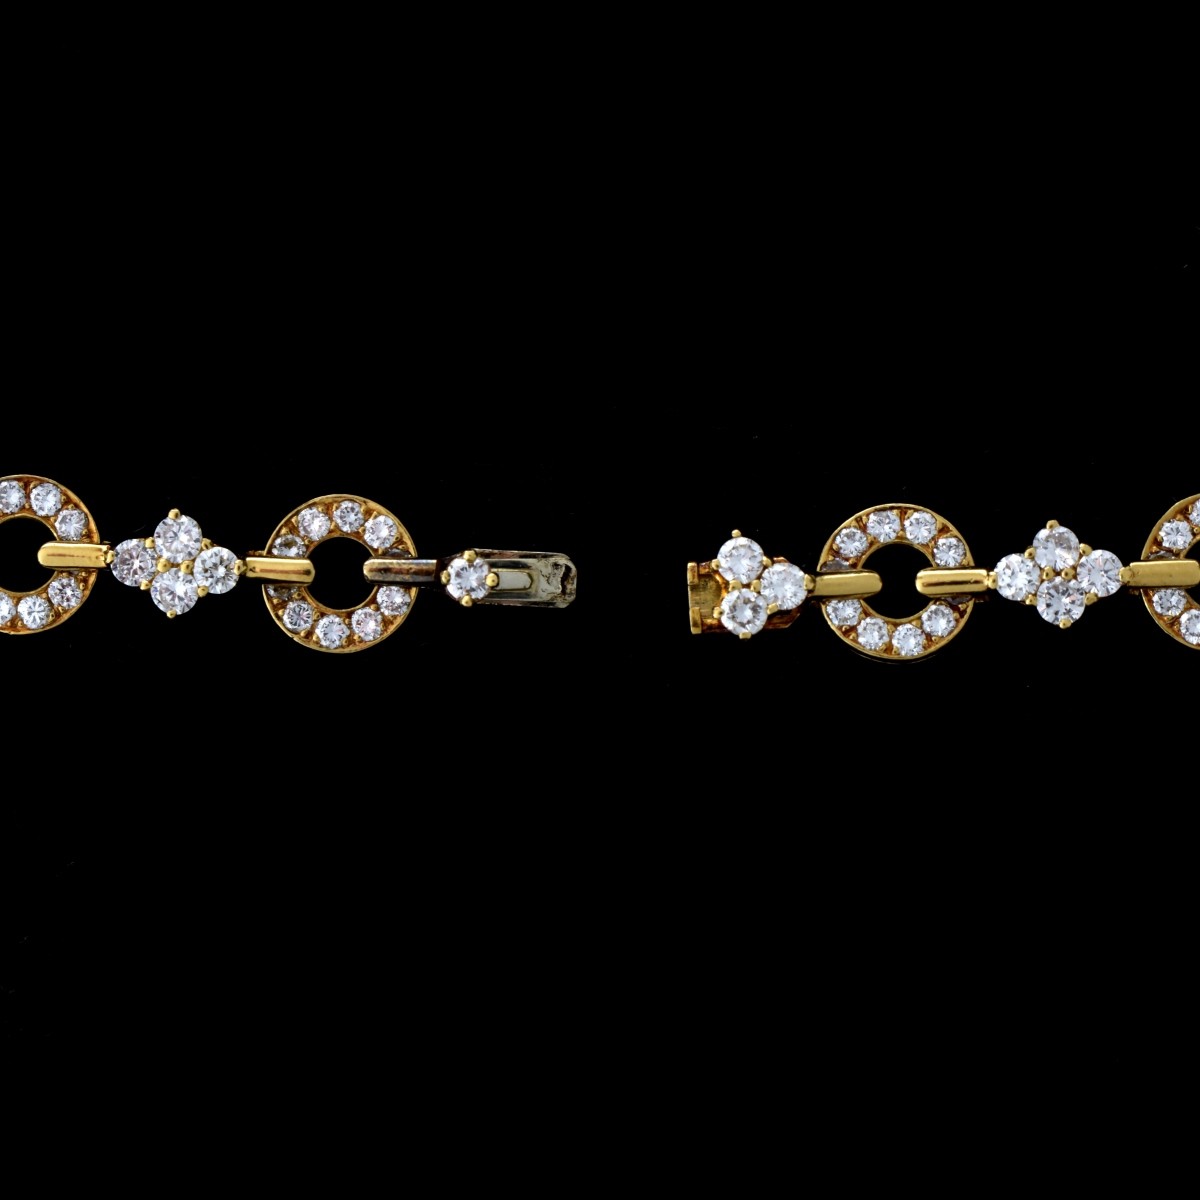 Stunning Black Opal, Diamond and 18K Necklace